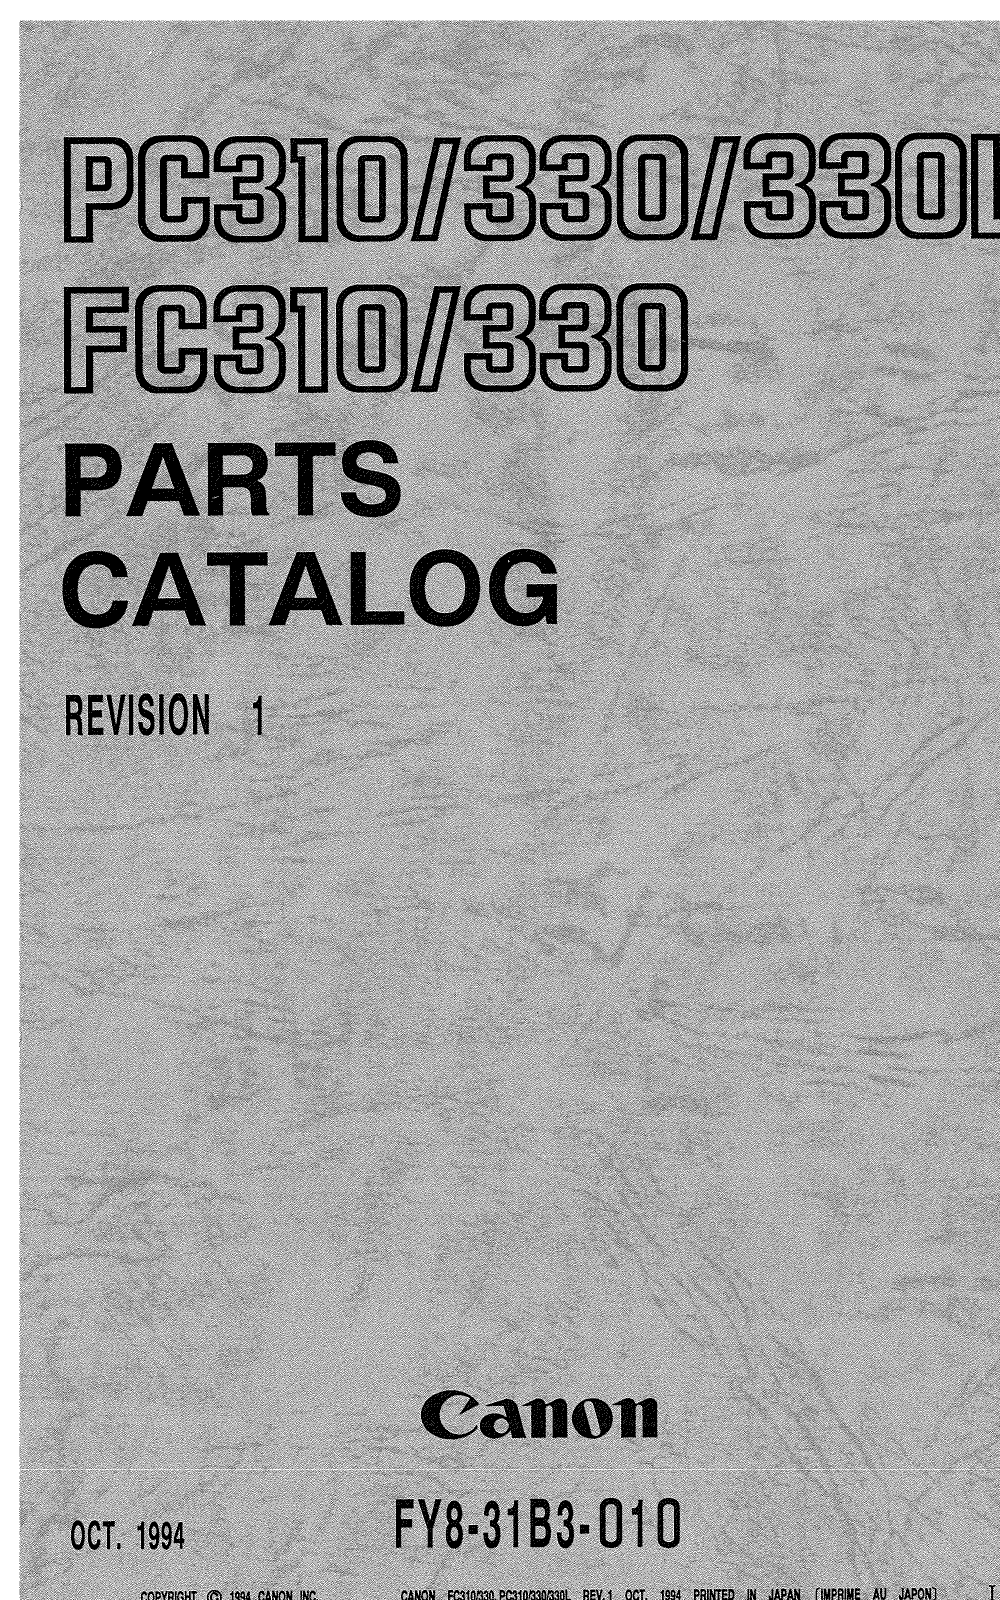 Canon FC-330 Parts Catalog